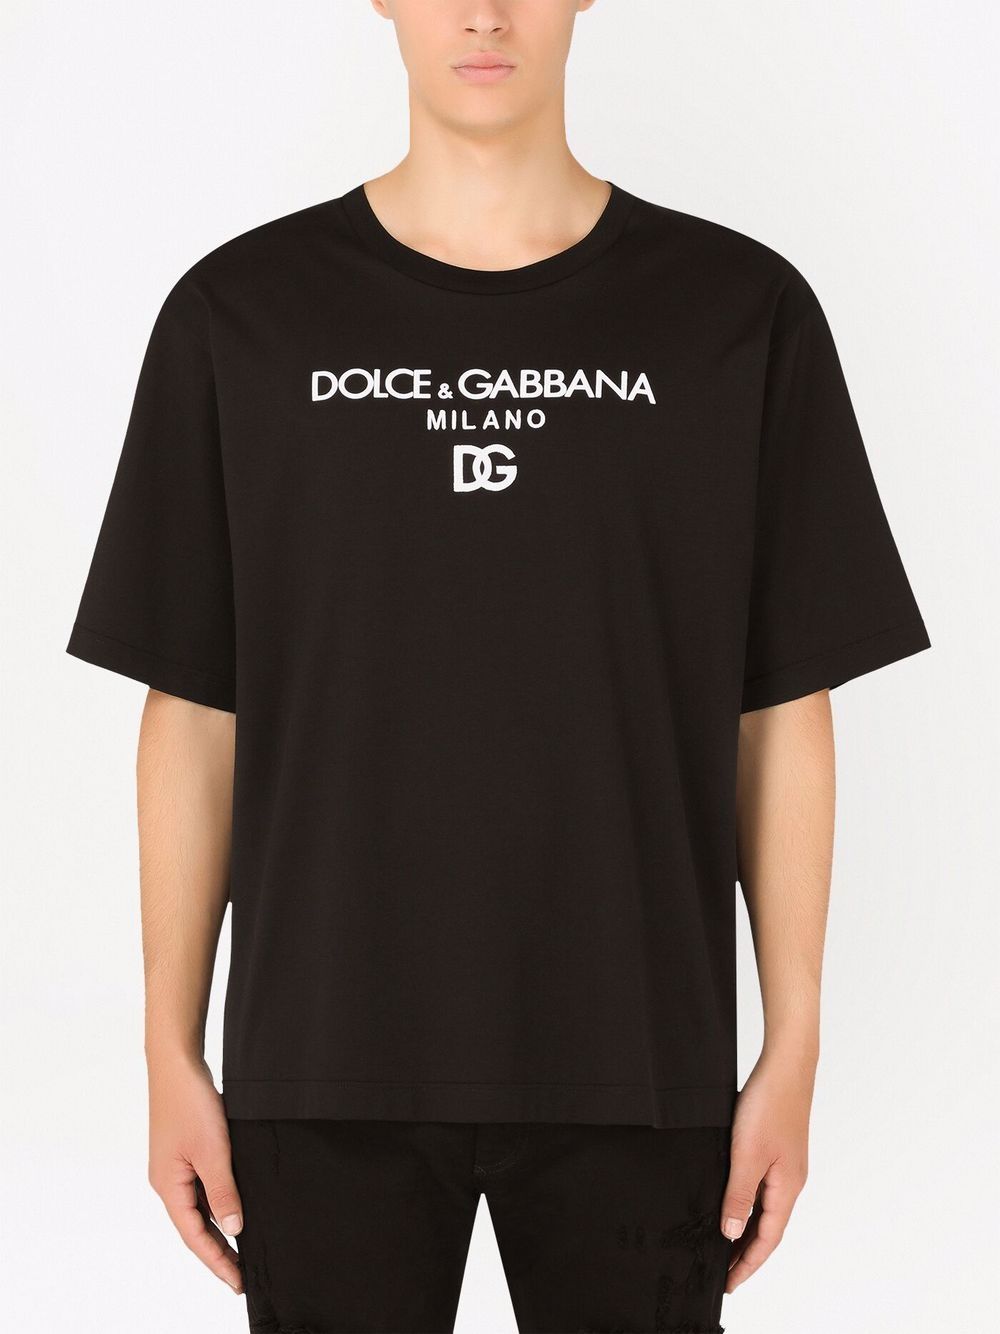 Dolce & Gabbana DG logo print T-shirt